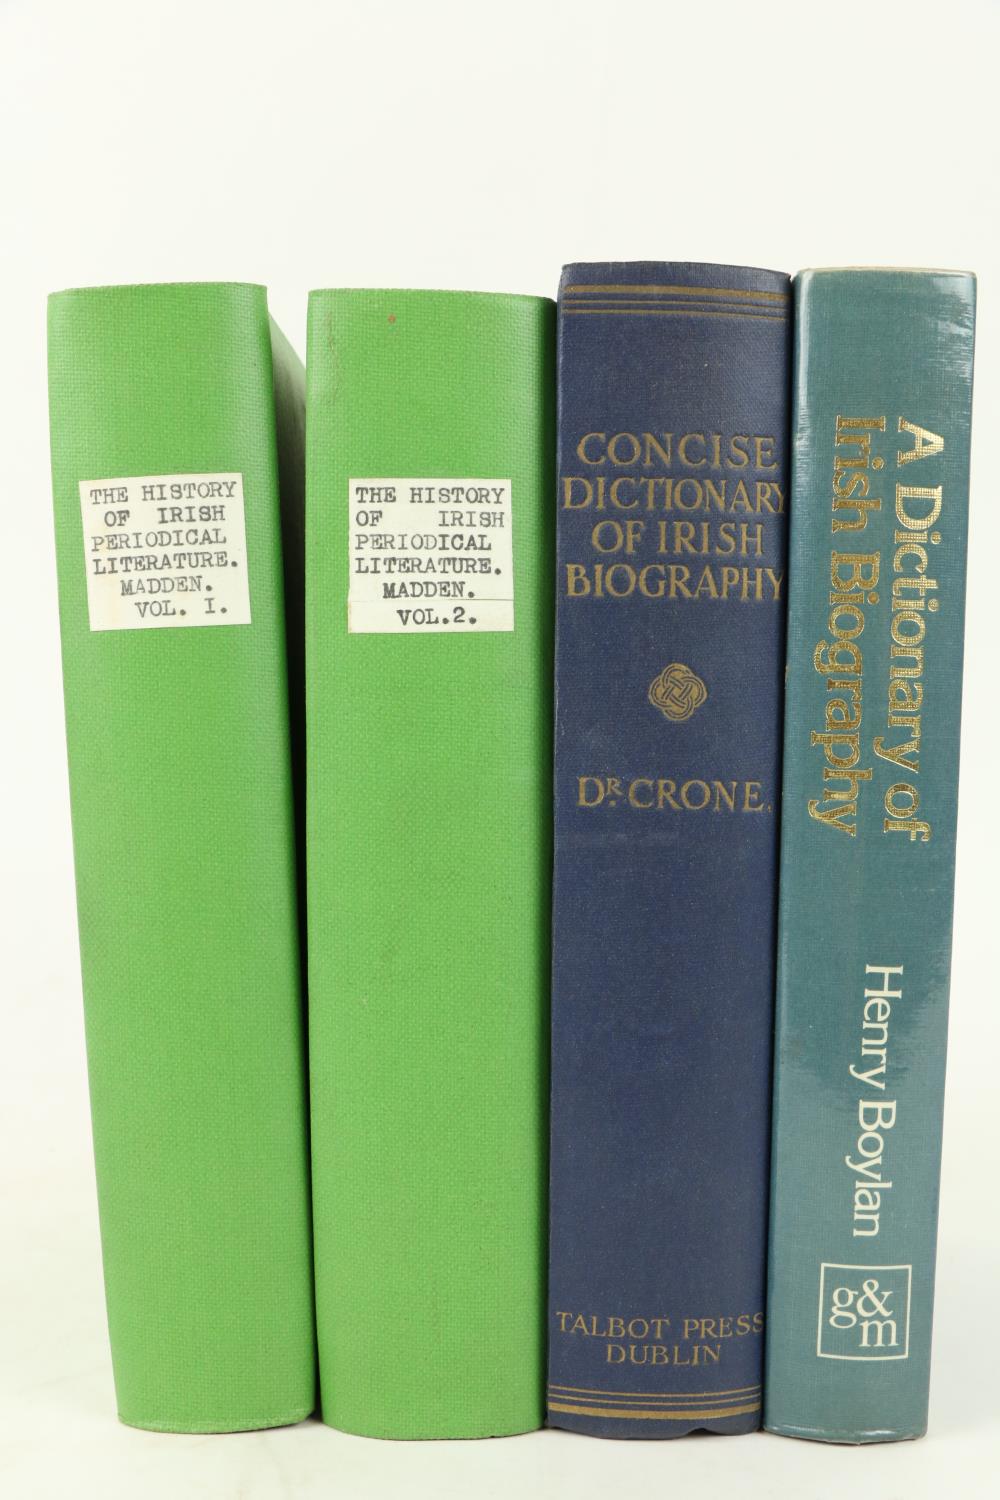 Madden (R.R.) TheÿHistory of Irish Periodical Literature, 2 vols. 8vo L. 1867. First Edn., recent